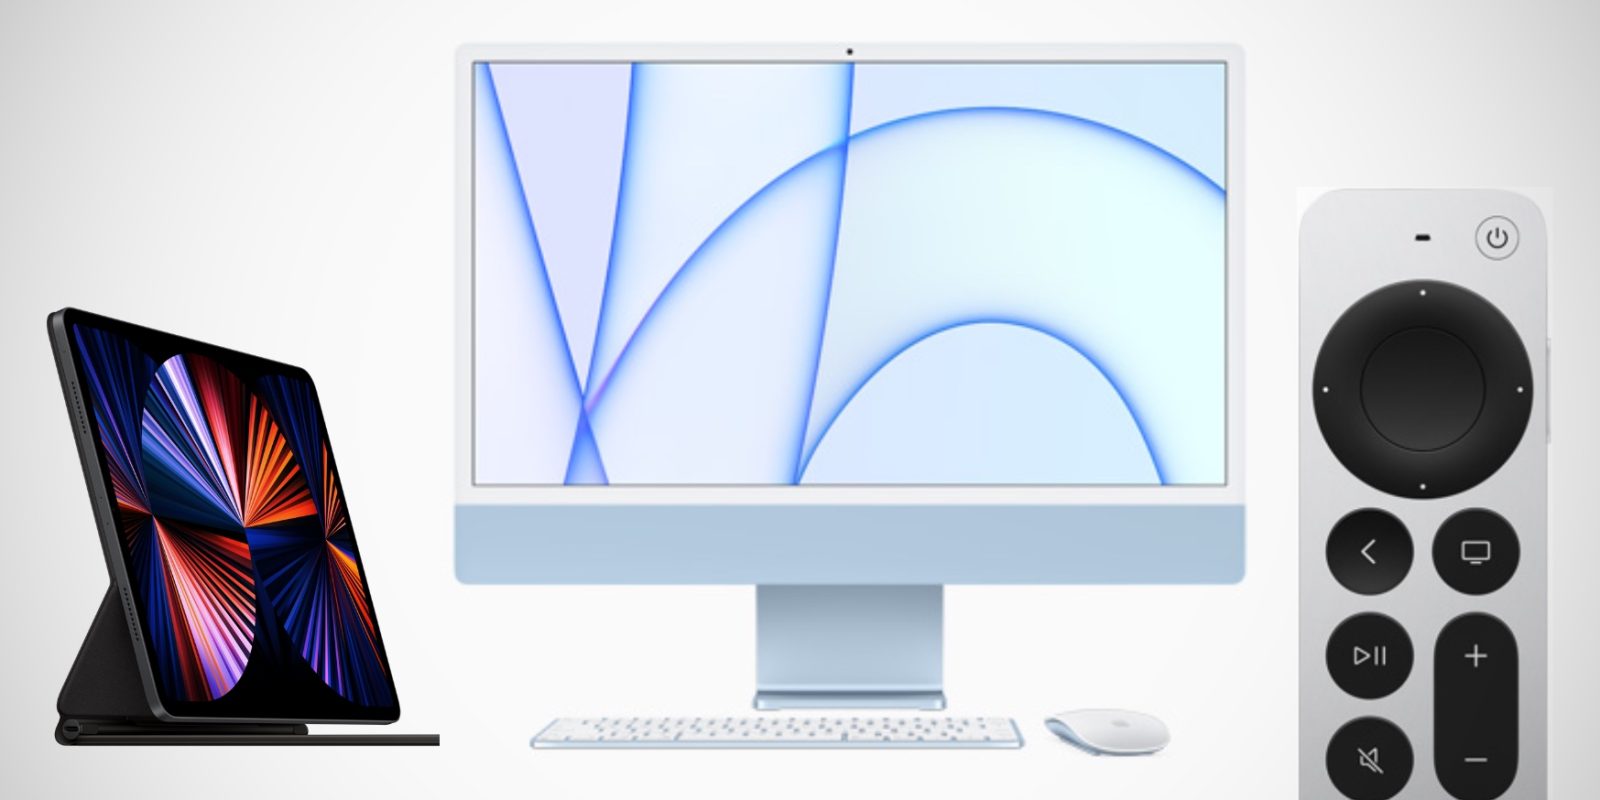 Ruddy Katastrofe gen New iMac, iPad Pro and Apple TV launching on May 21 [update] - 9to5Mac